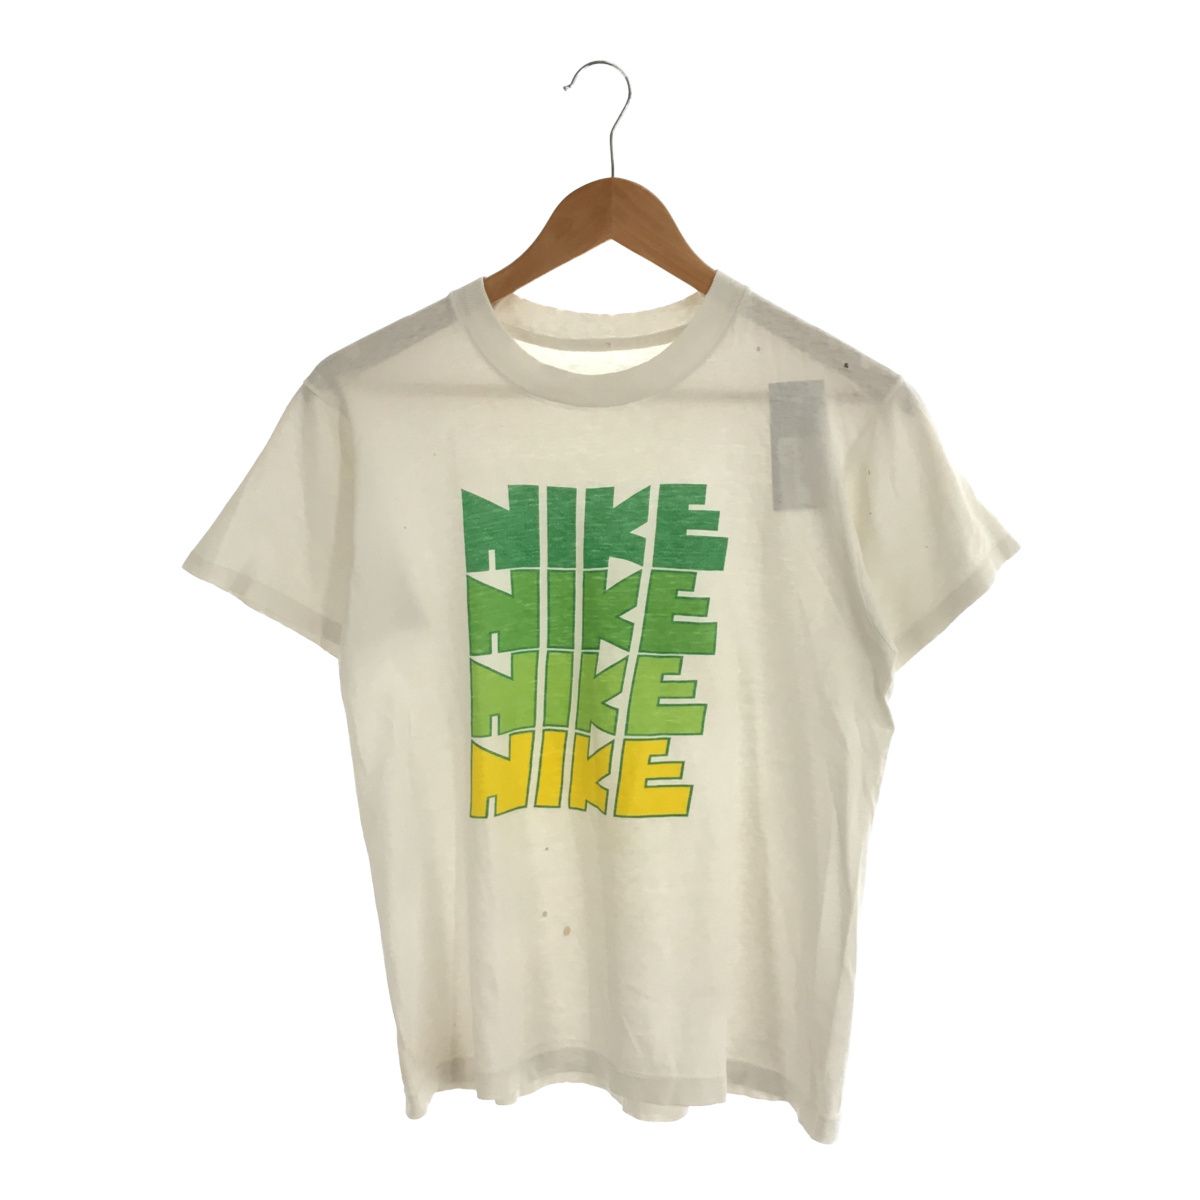 NIKE ナイキ 70s Tシャツ ゴツナイキ 4連 染み込みプリント - メルカリ